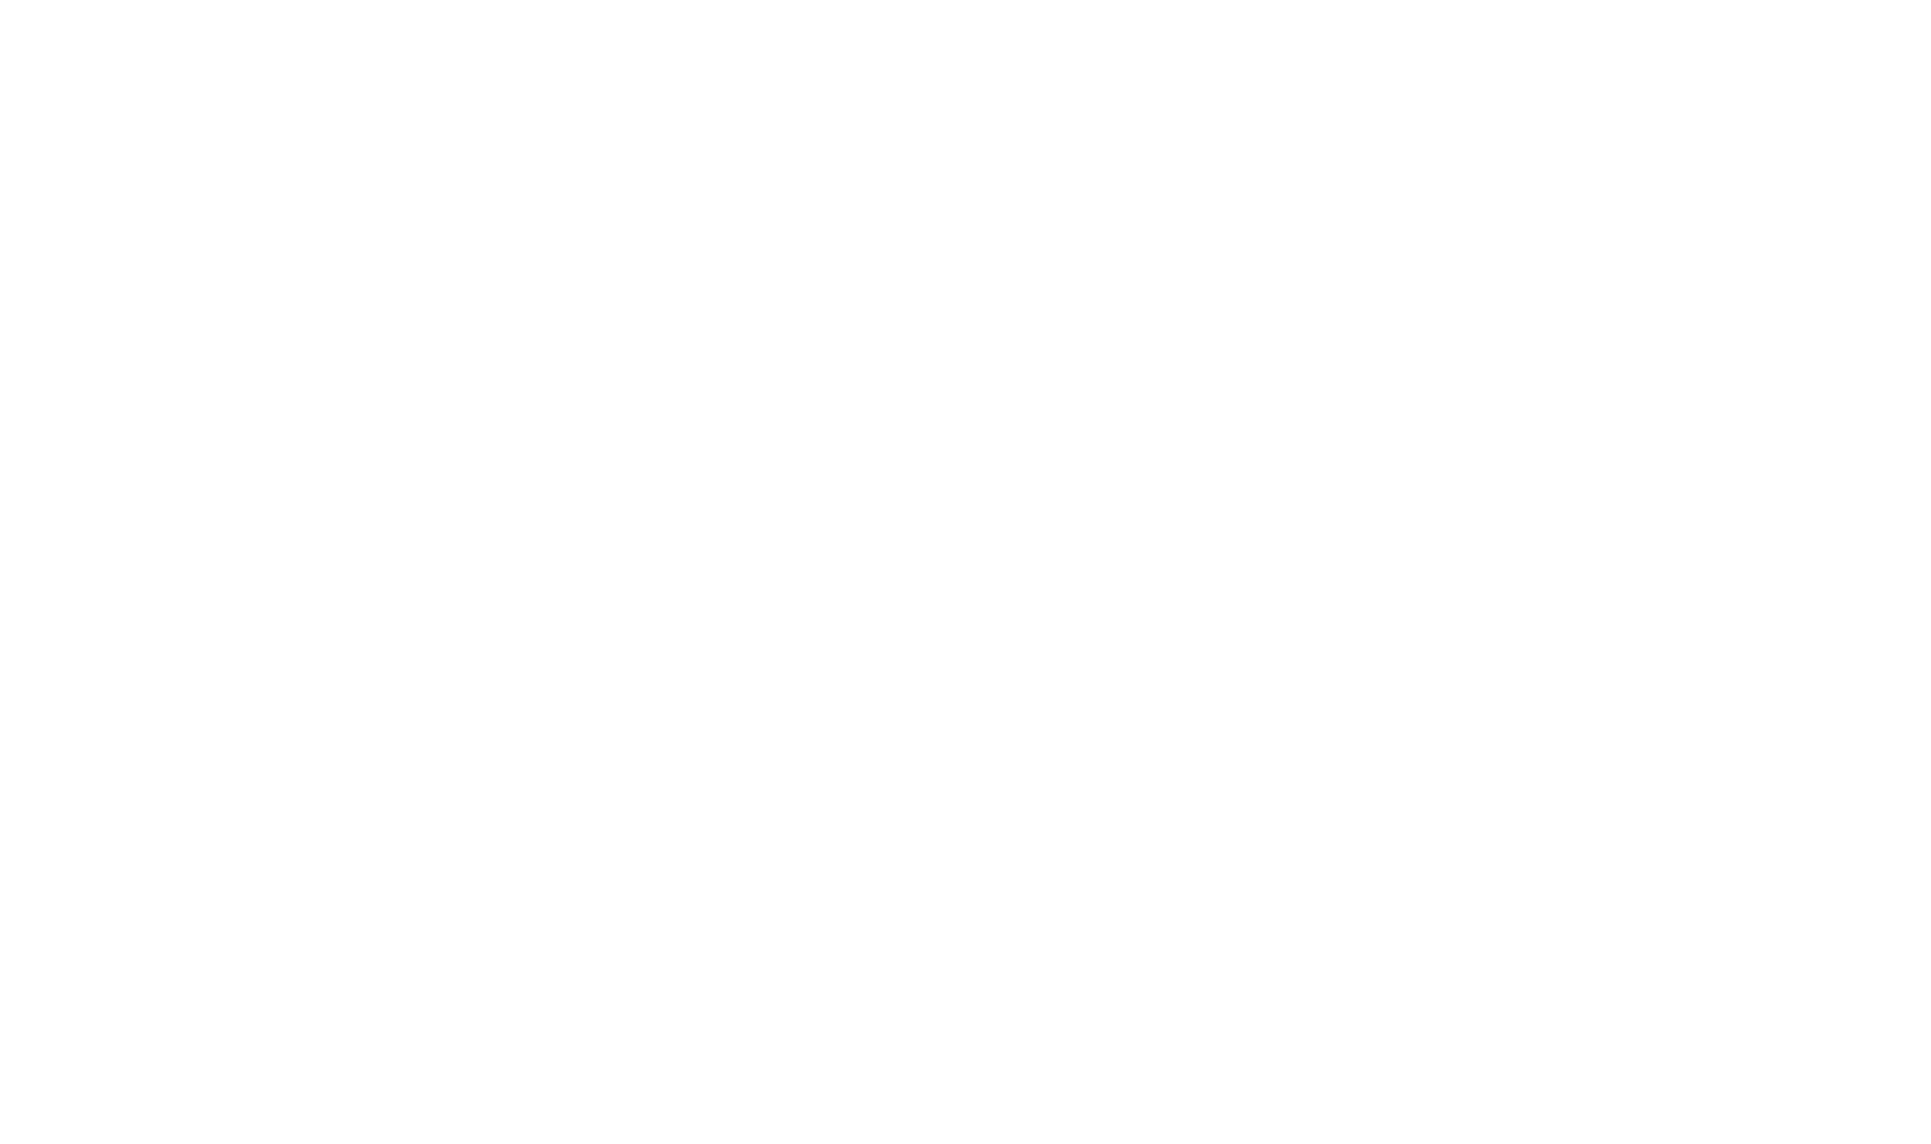 Okalona Missionary Baptist Church